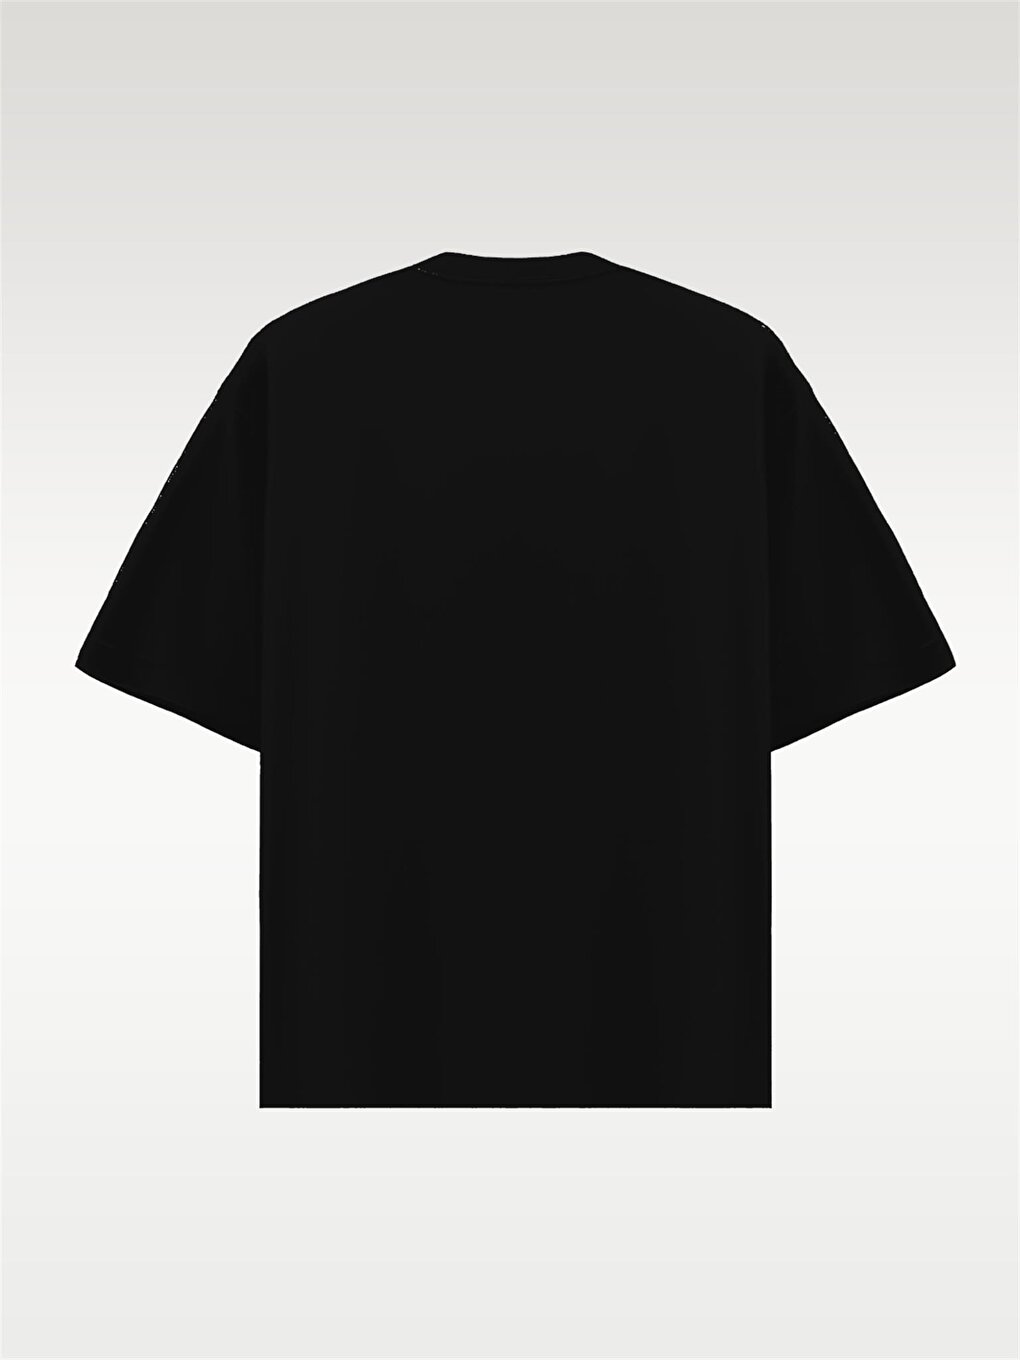 Базовая футболка Oversize черная ablukaonline цена и фото